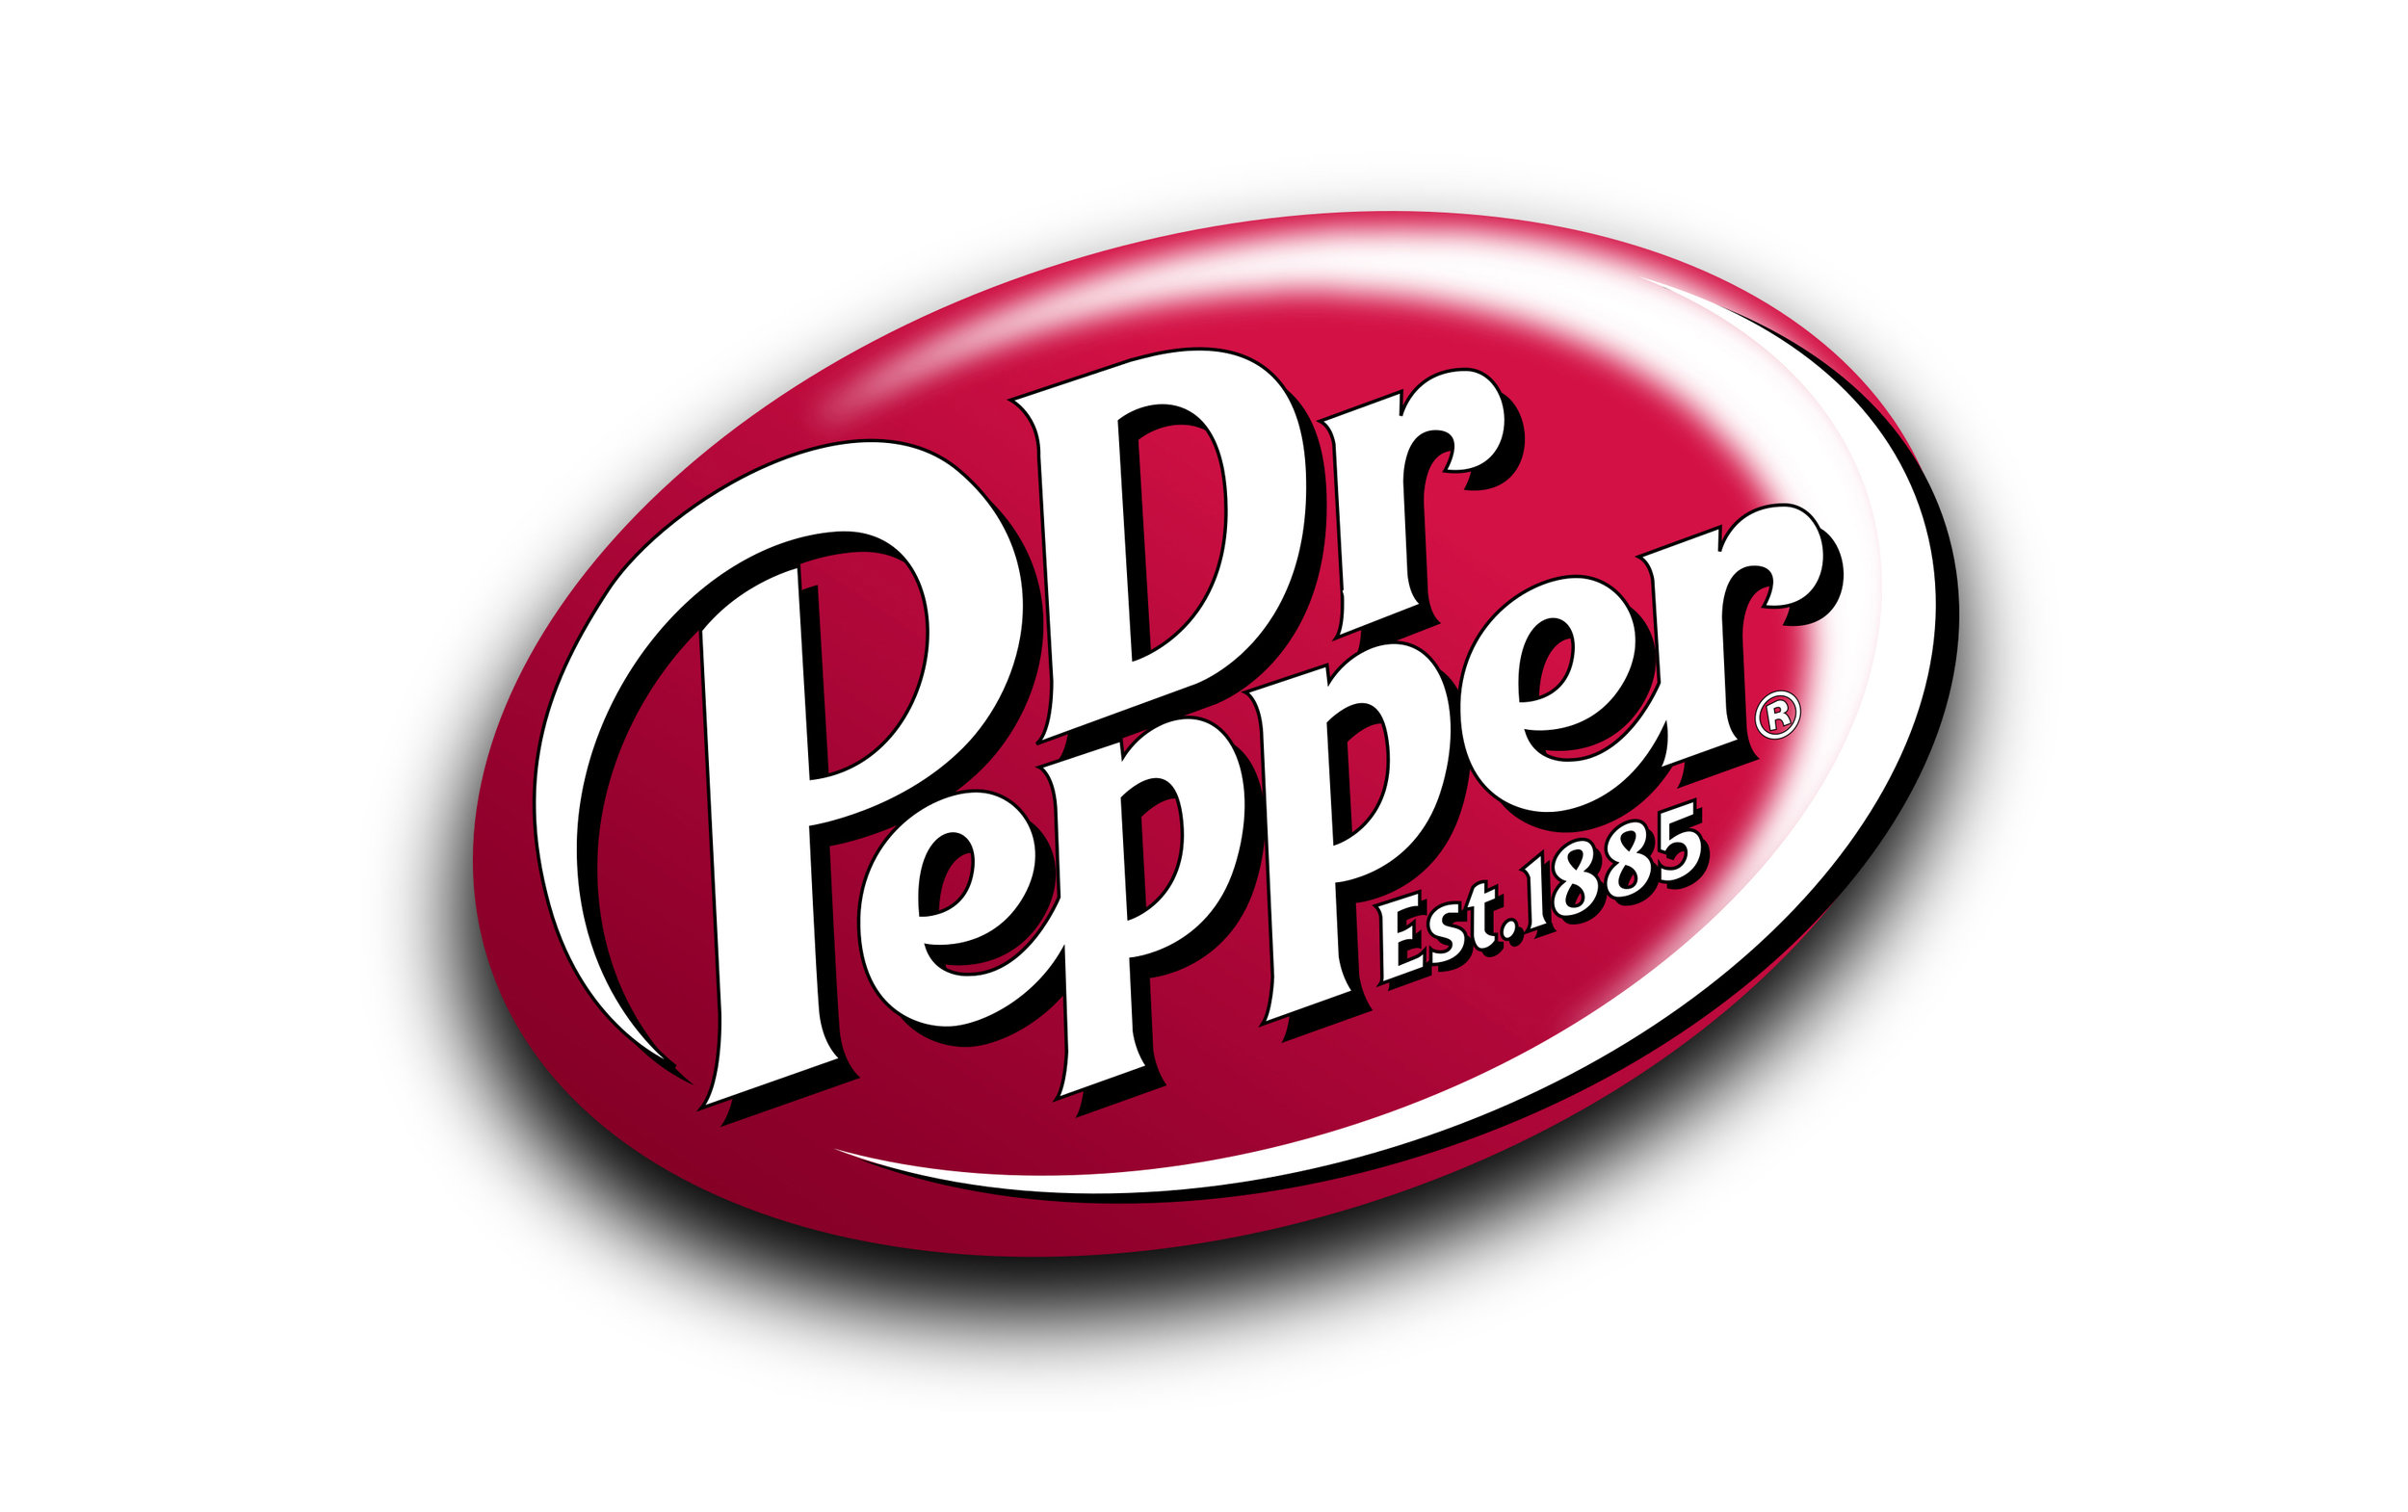 Dr pepper